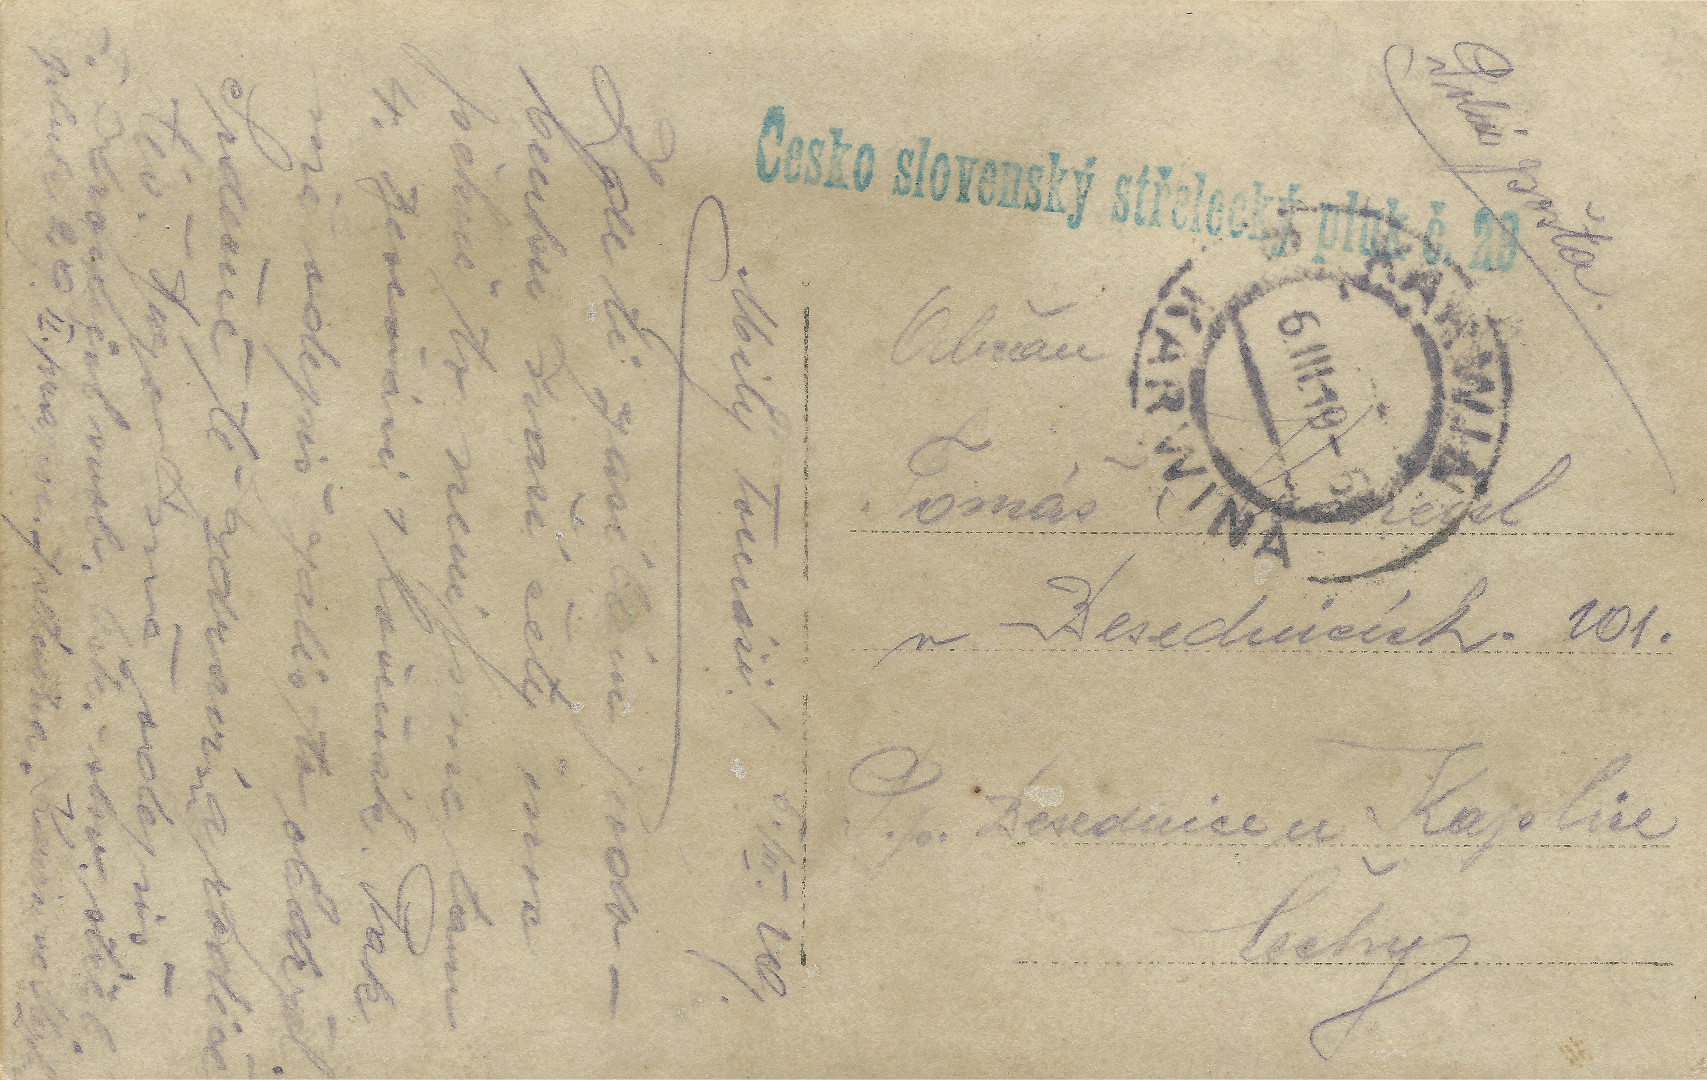 Na tto stran pohlednice je vidt modrozelen
  plukovn raztko s npisem esko slovensk steleck pluk . 29, run npis poln pota a potovn
  raztko s npisy Karwin, Karwina a 6.III.19